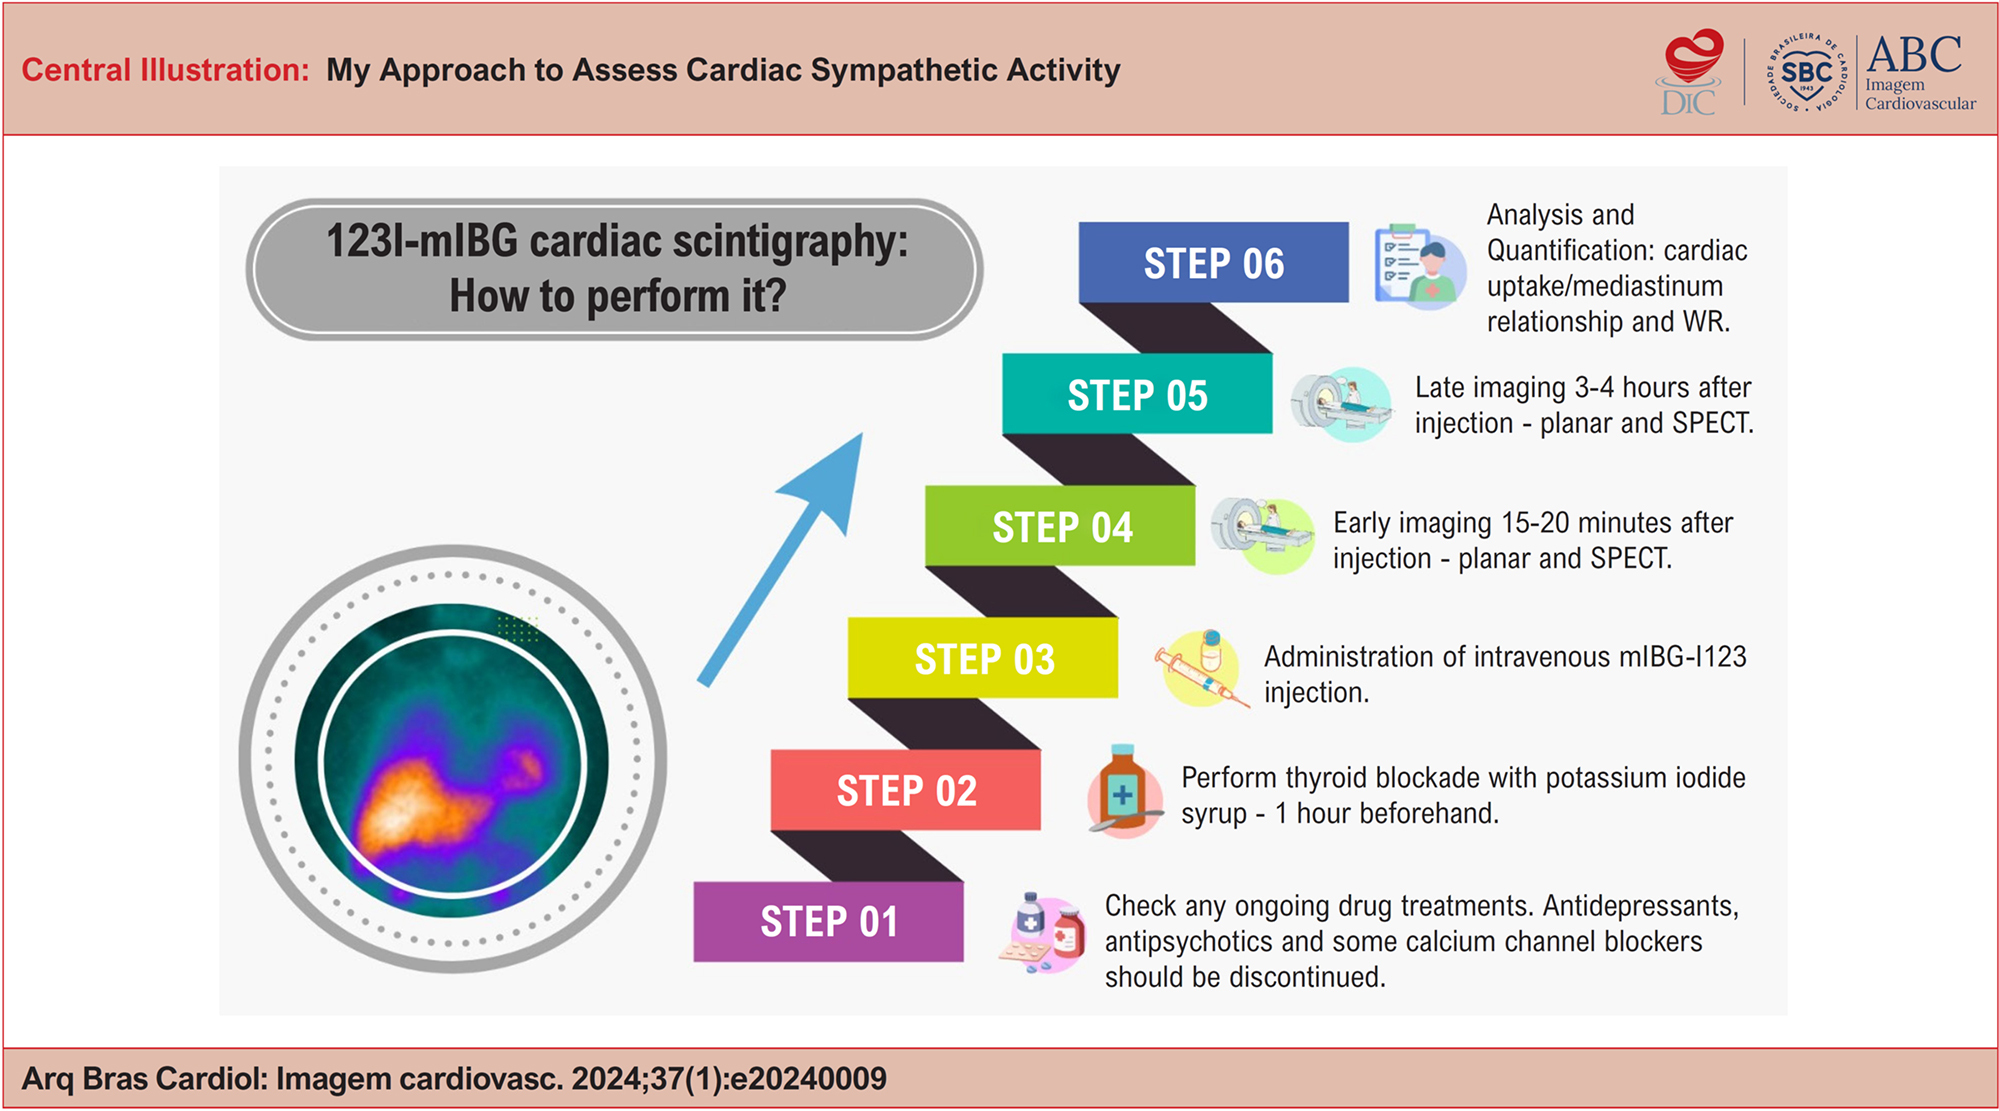 My Approach to Assess Cardiac Sympathetic Activity